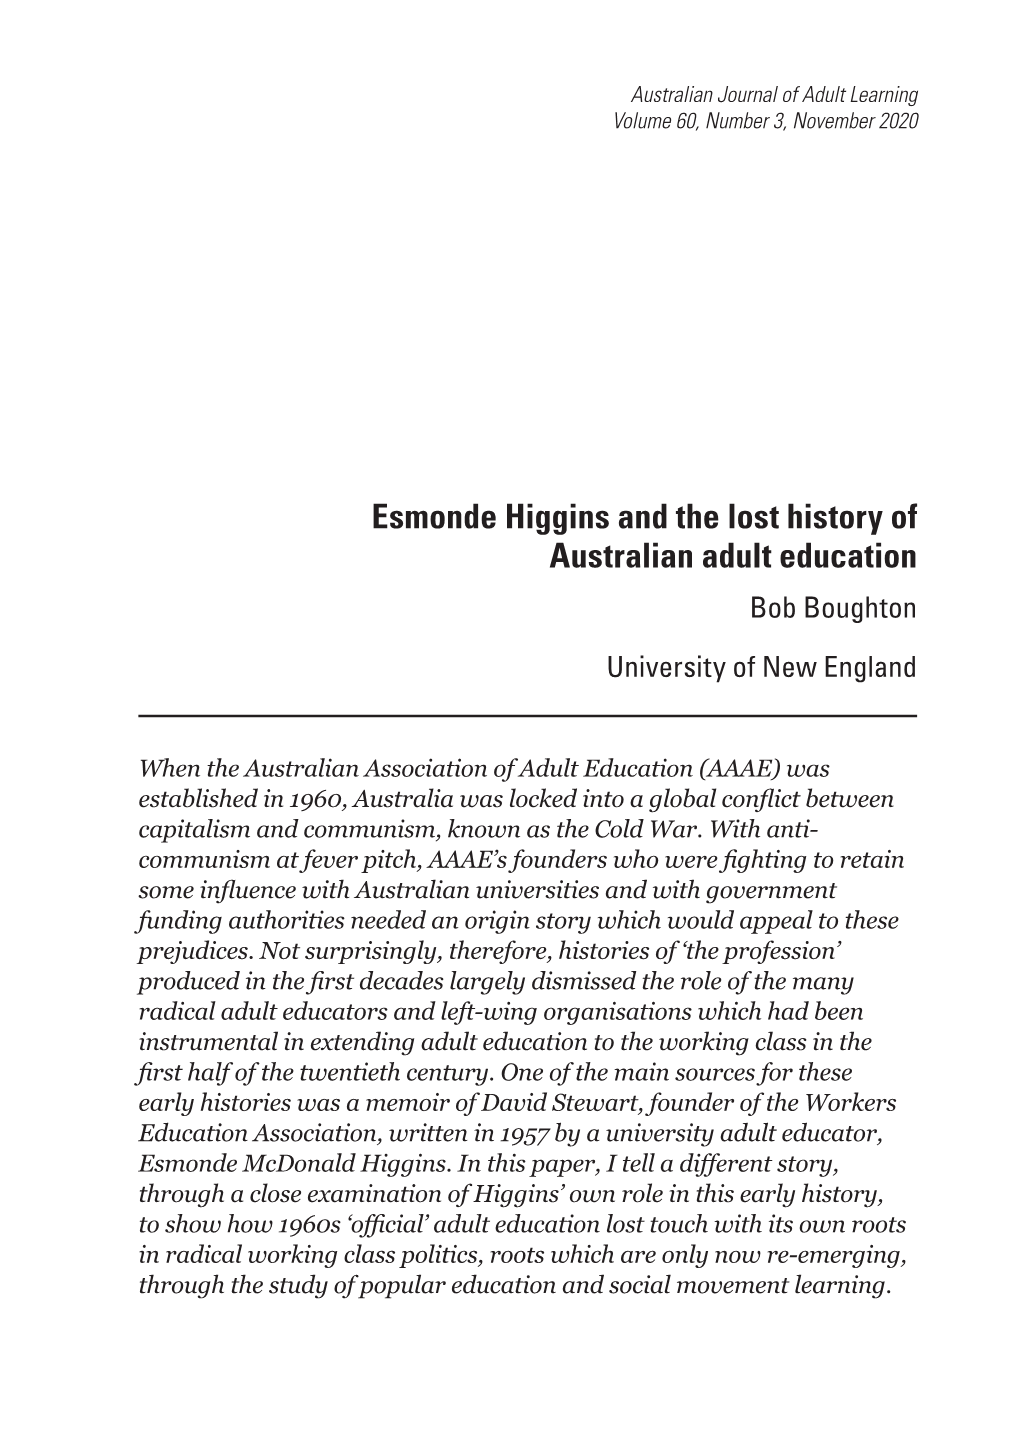 Esmonde Higgins and the Lost History of Australian Adult Education Bob Boughton